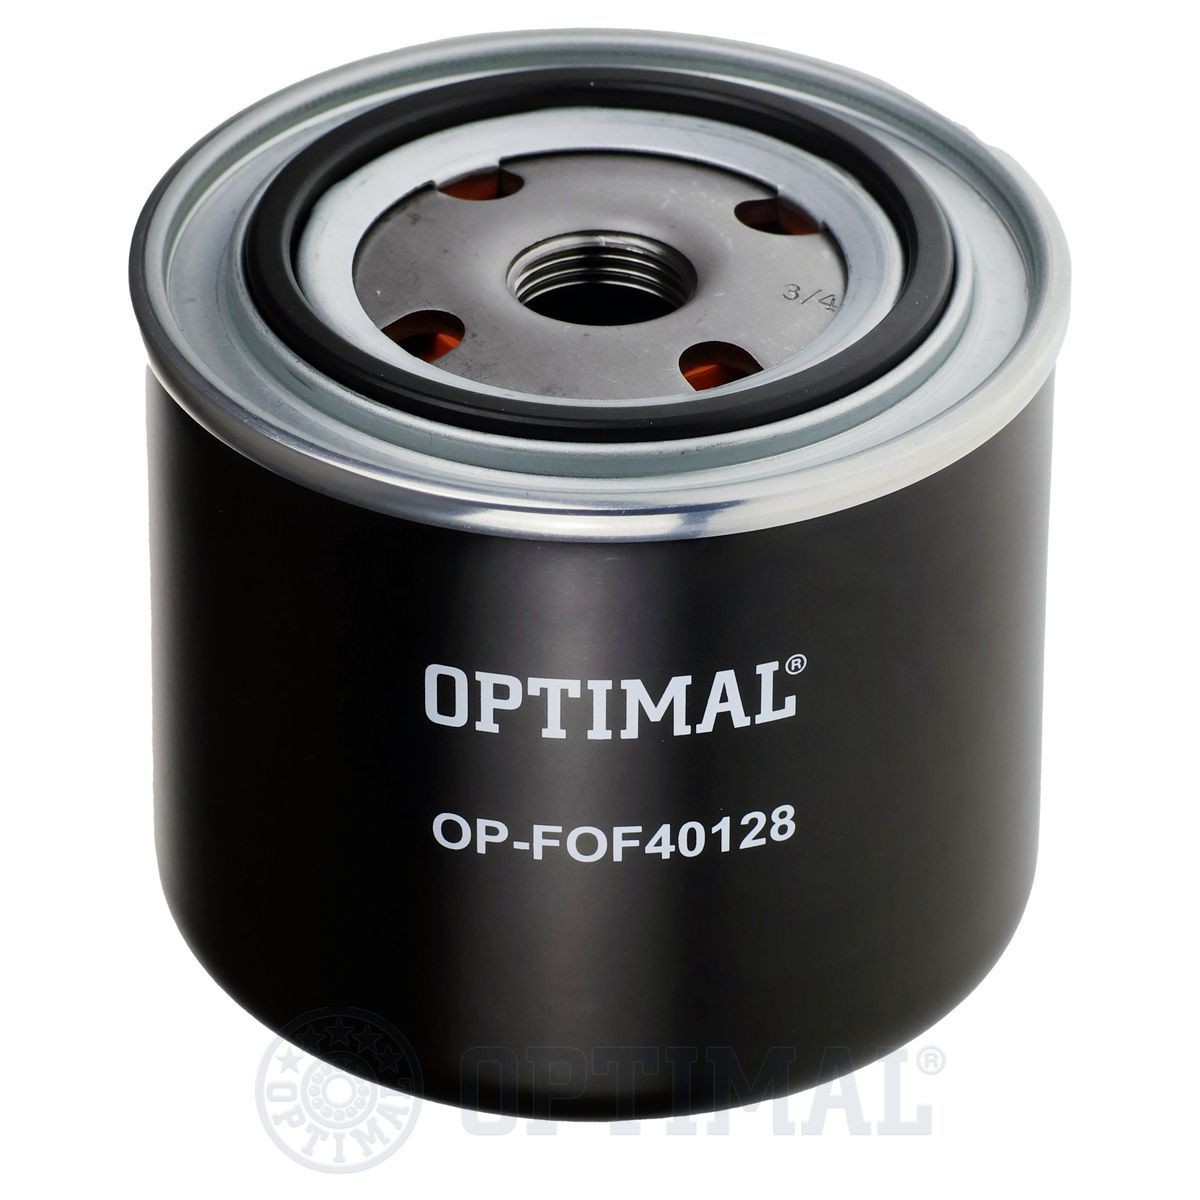 OPTIMAL OP-FOF40128 Oil filter 6 50 367